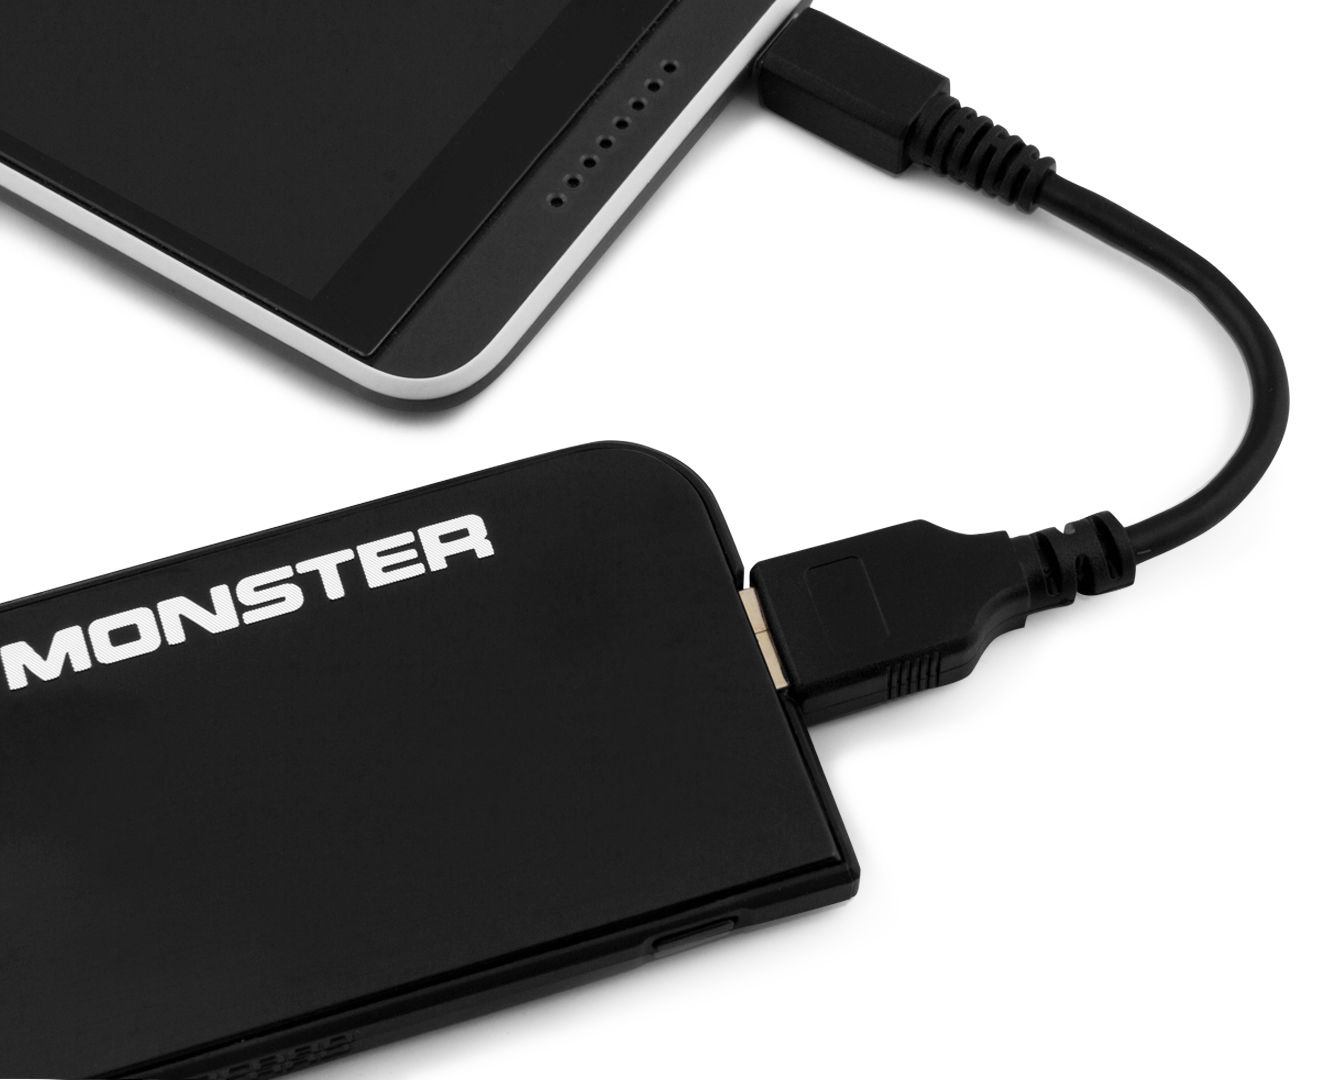 monster powercard portable battery